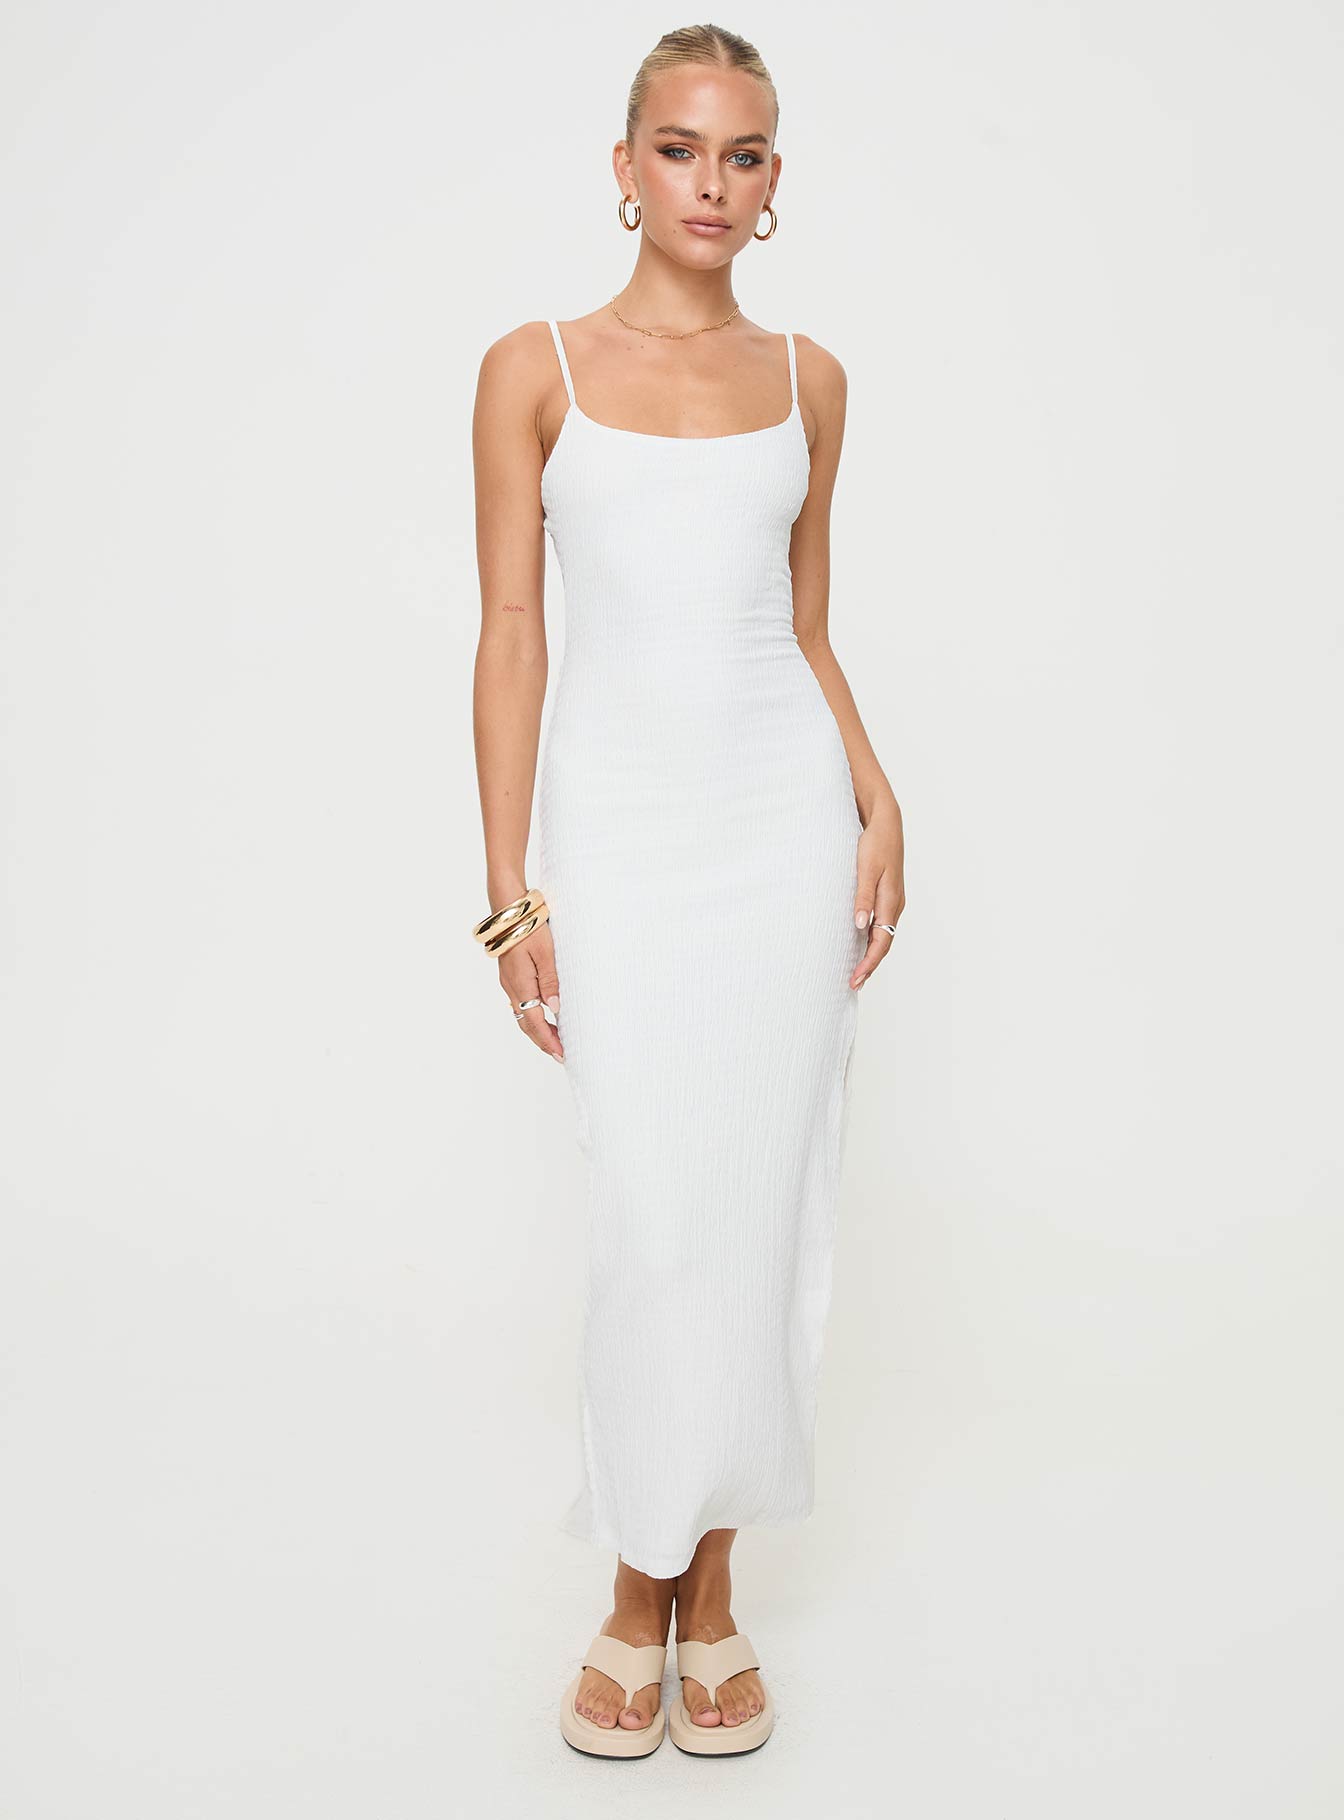 Shop Formal Dress - Elestria Maxi Dress White fifth image